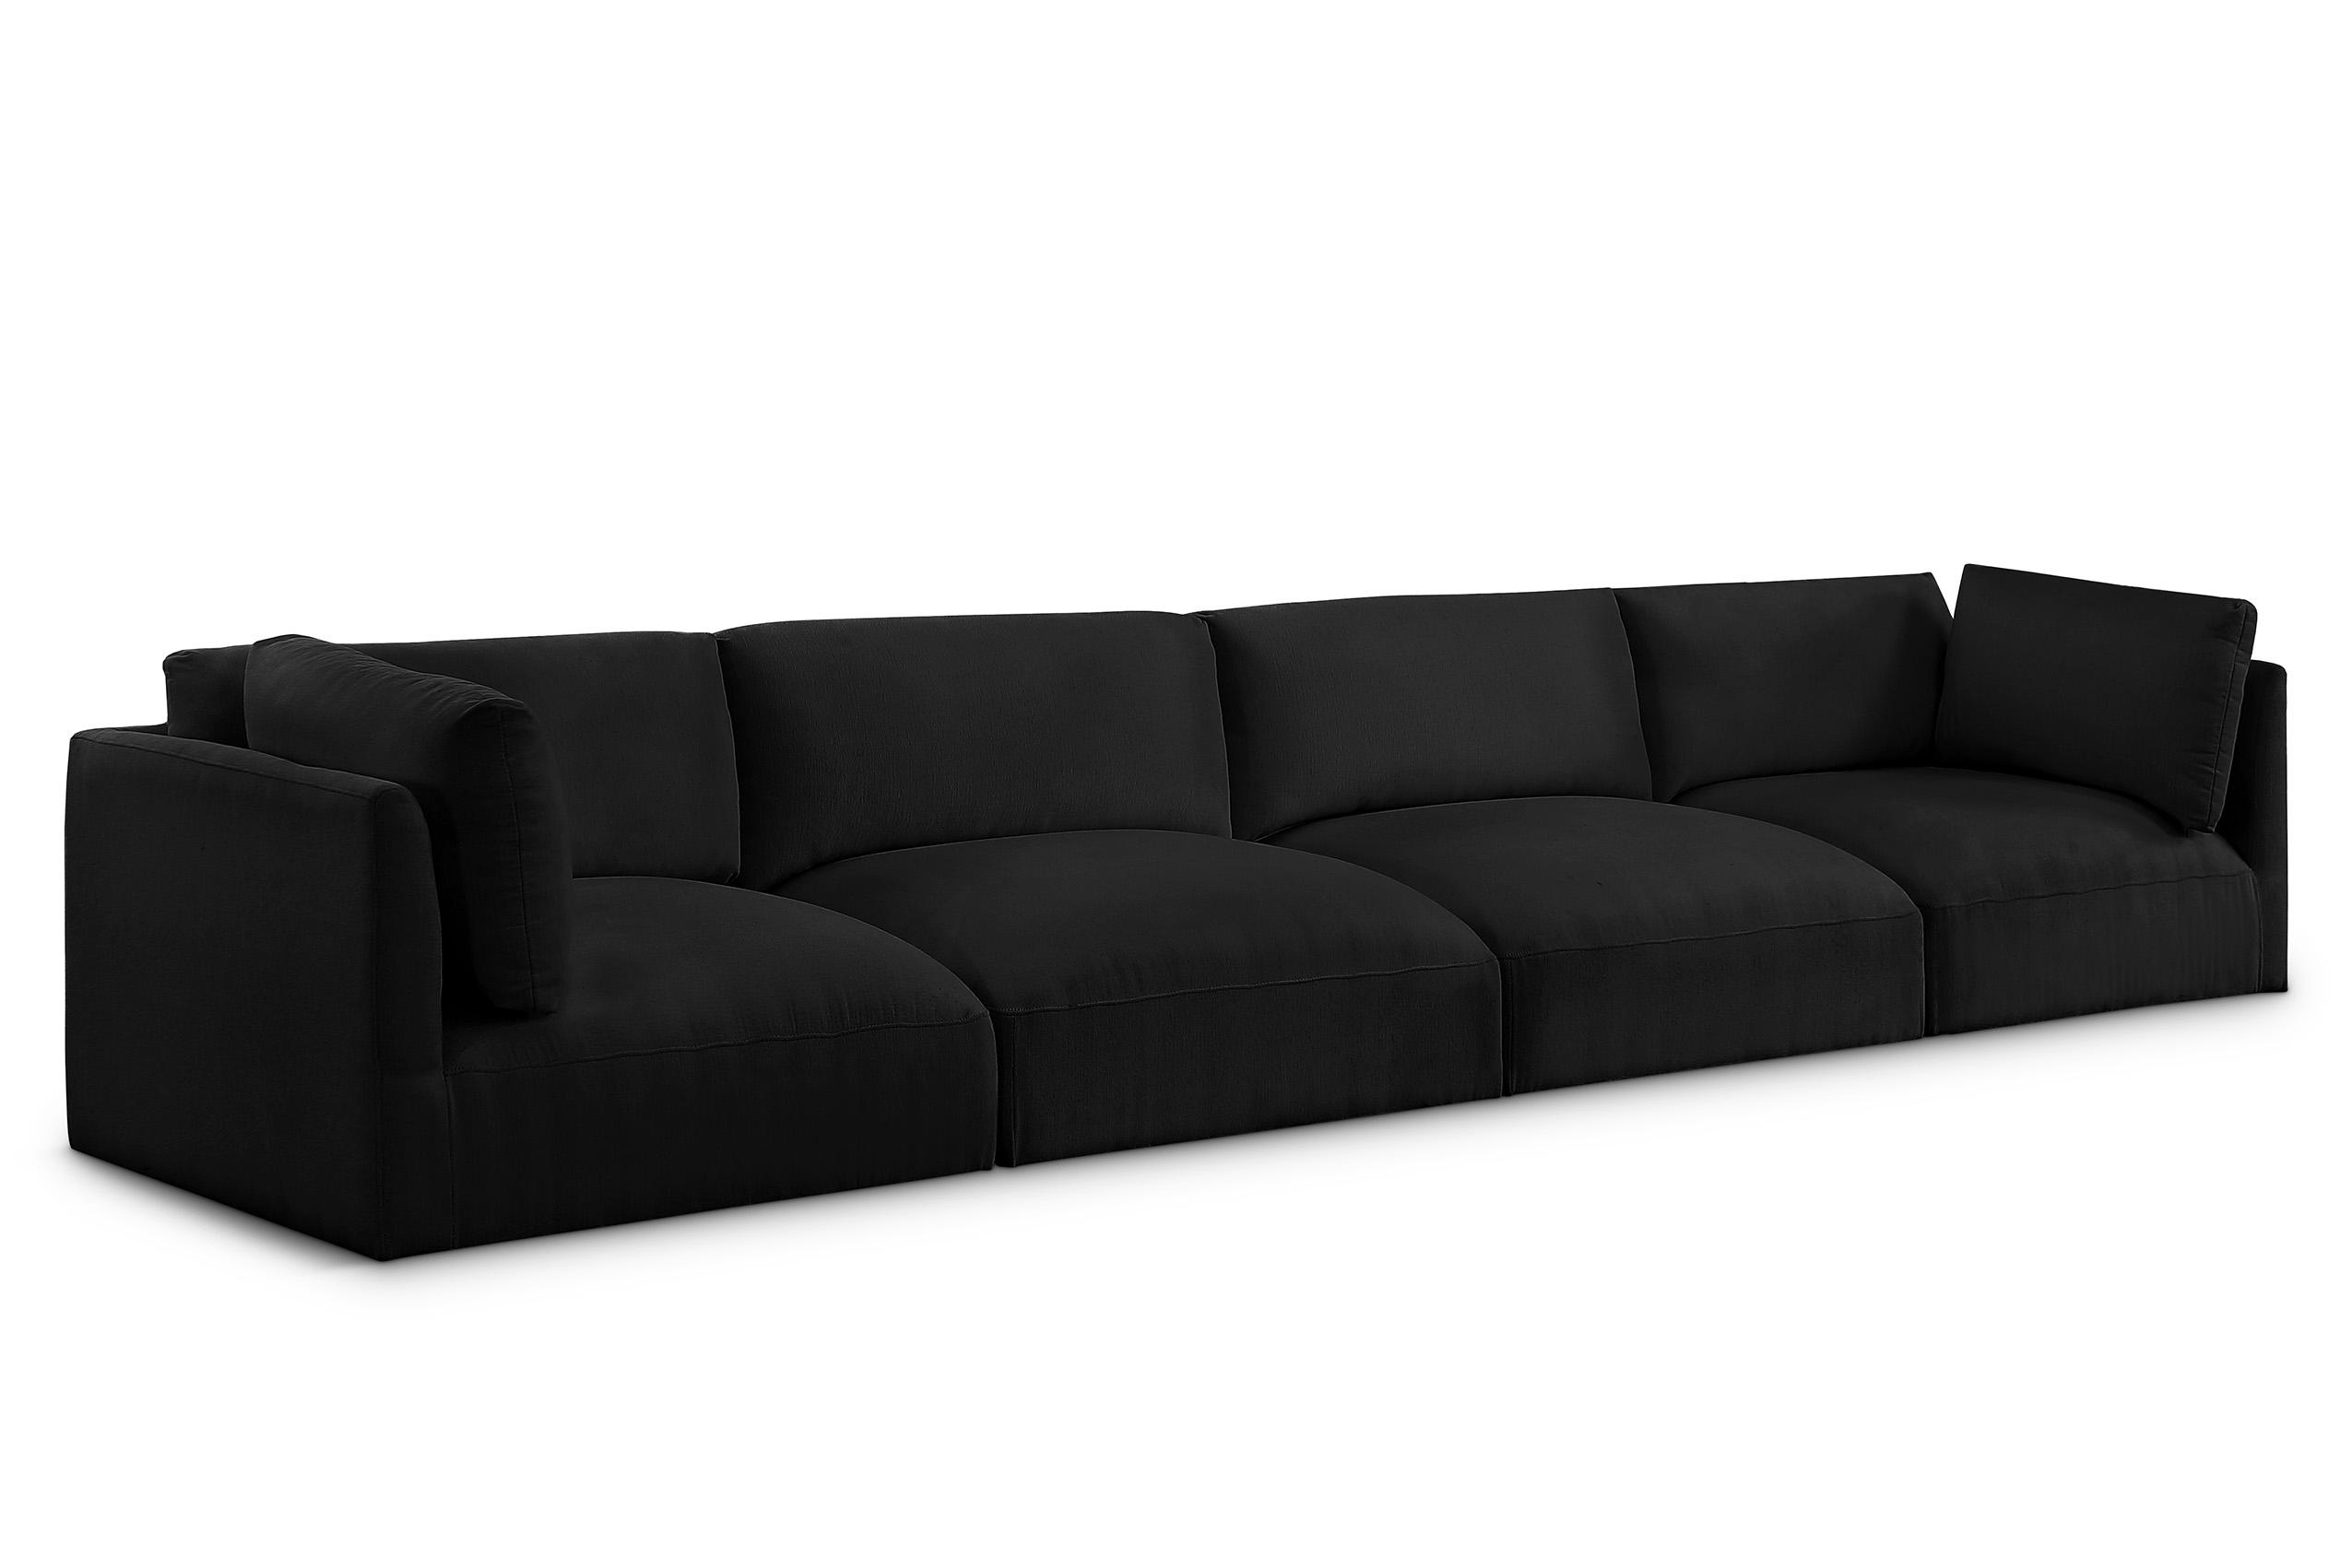 Contemporary, Modern Modular Sofa EASE 696Black-S152B 696Black-S152B in Black Fabric